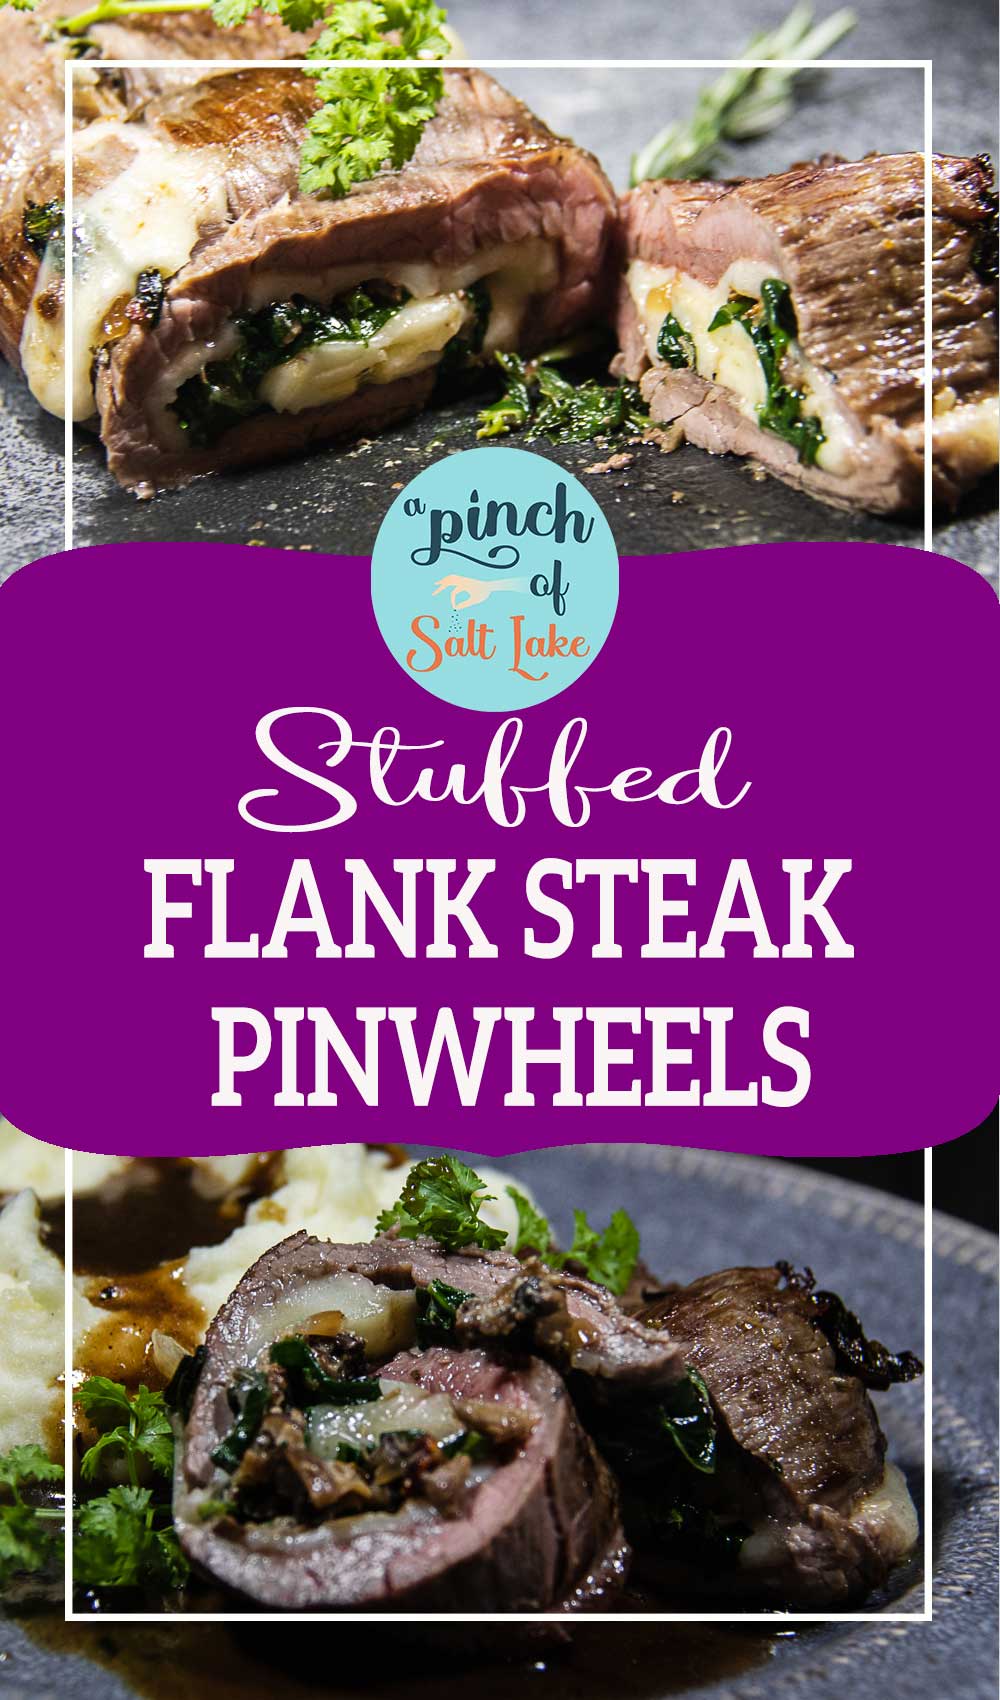 Stuffed Flank Steak Pinwheels - A Pinch of Salt Lake